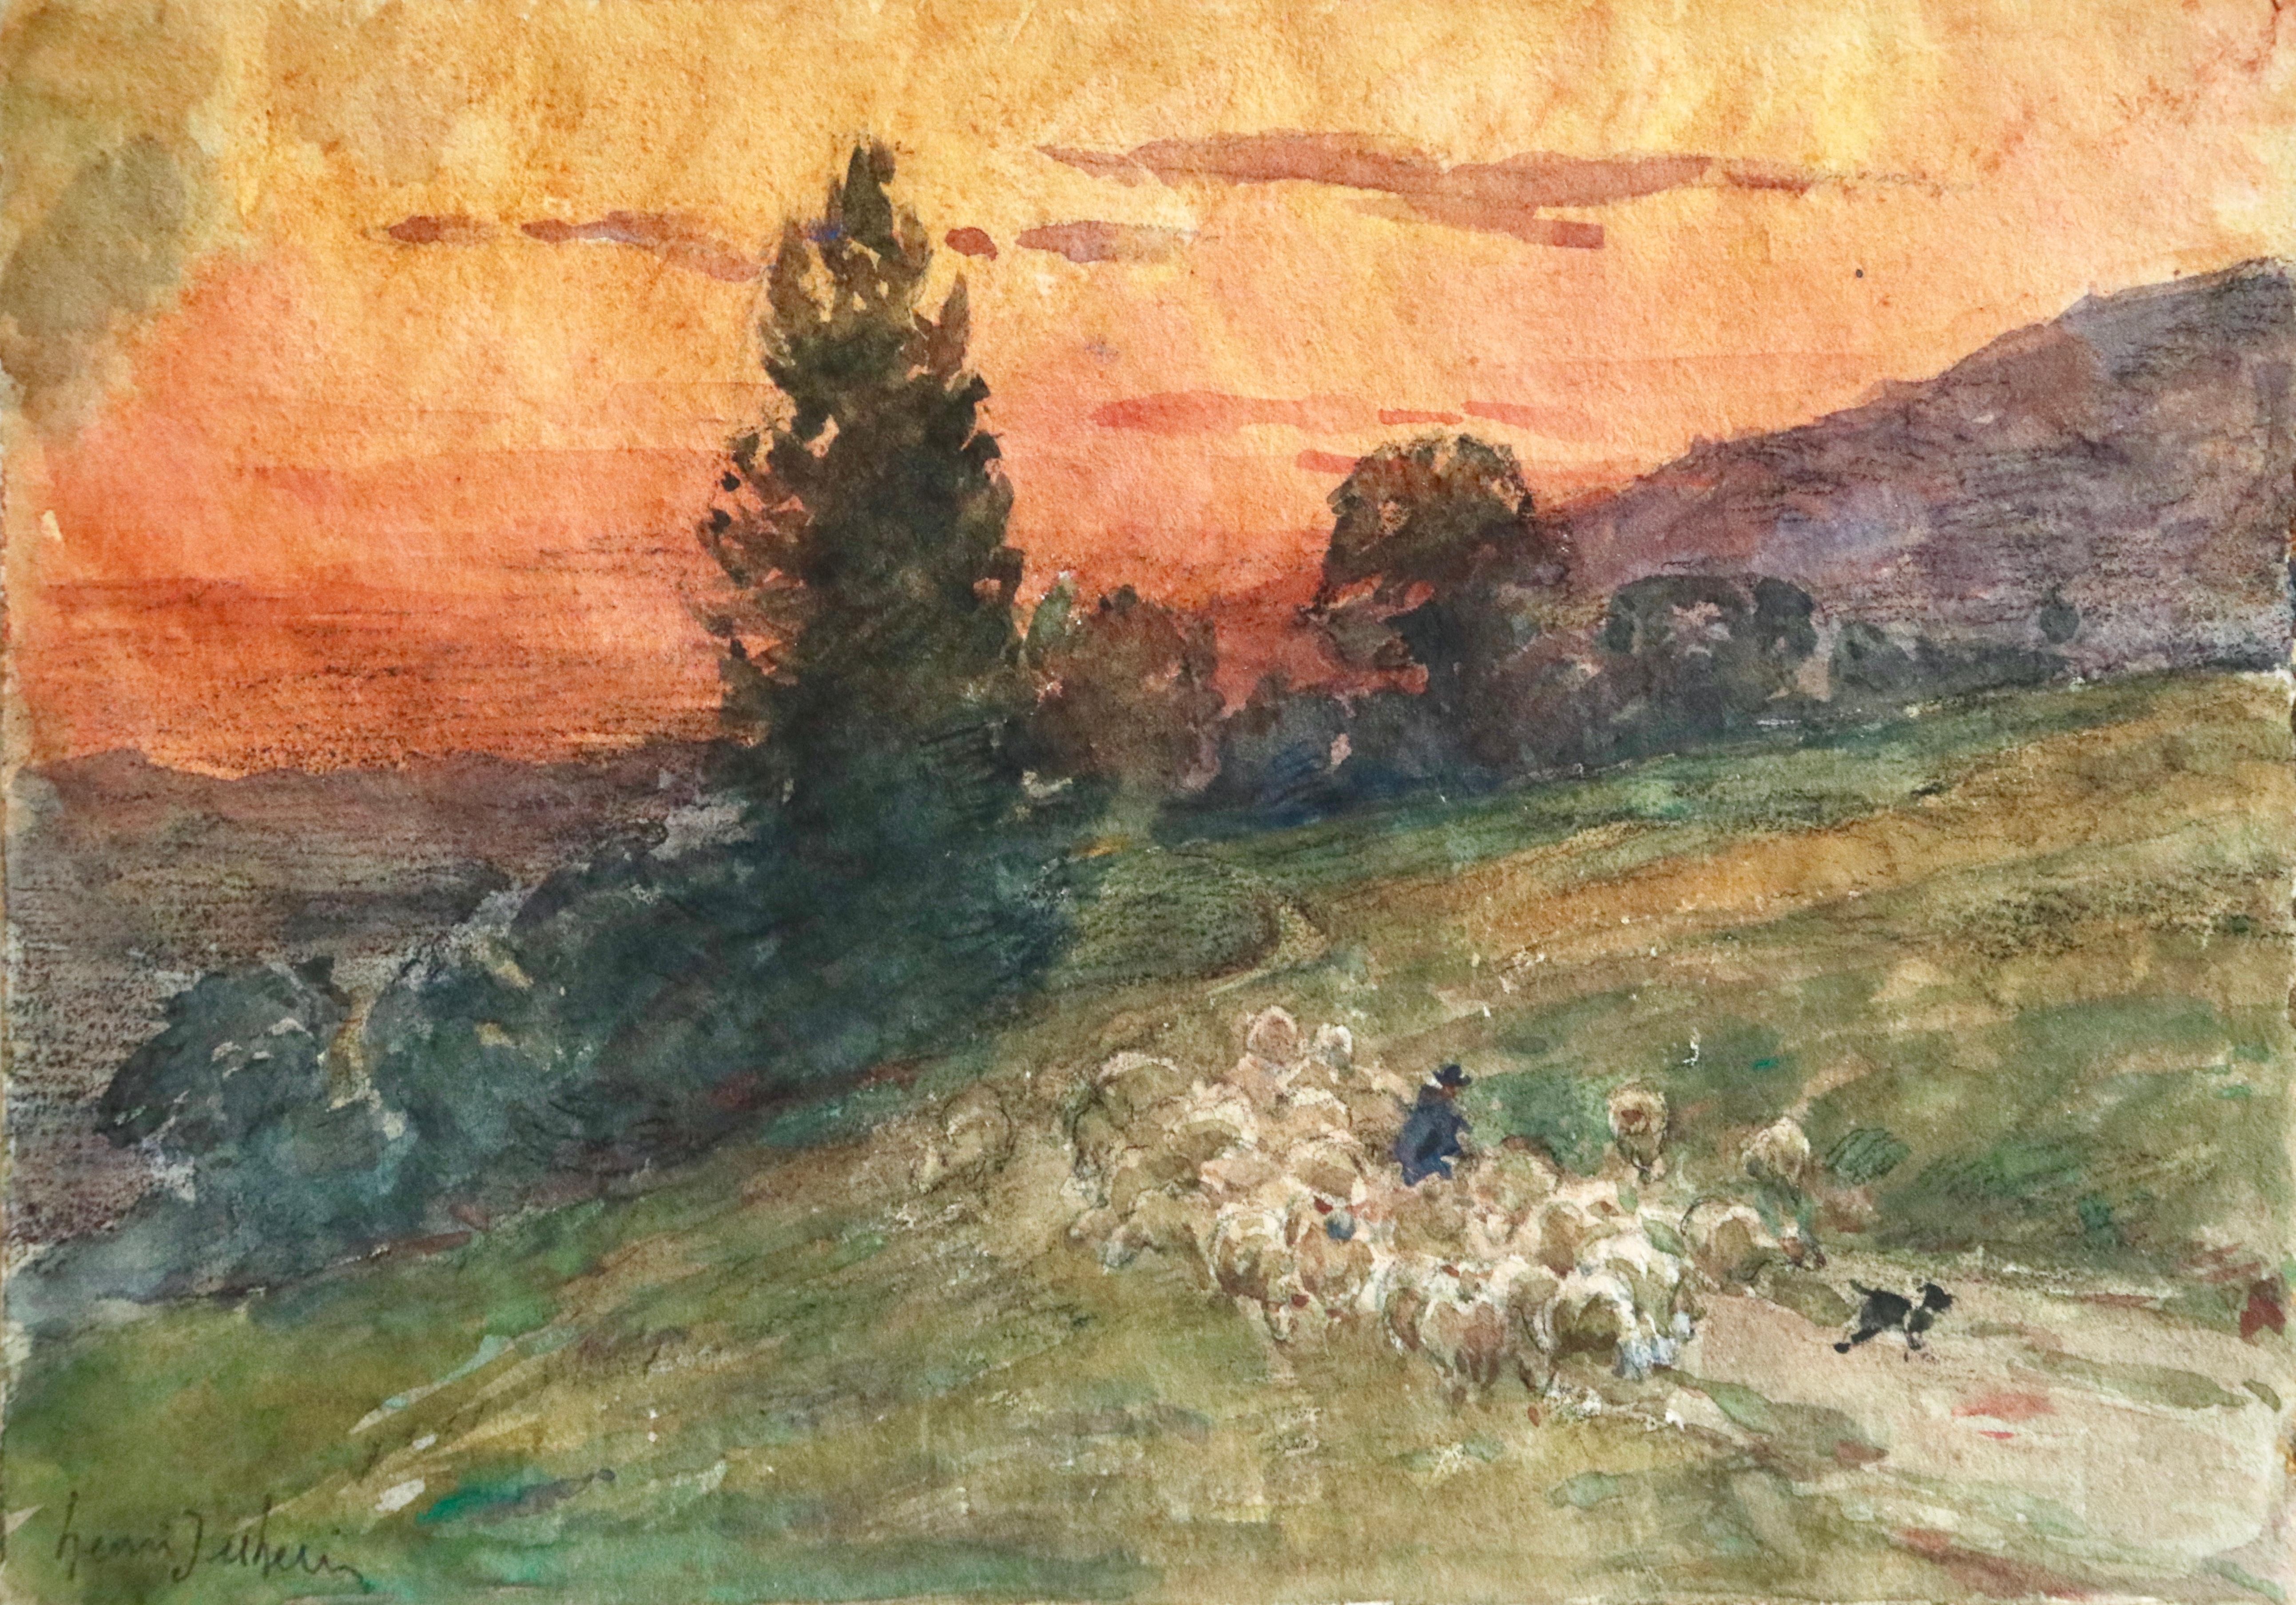 Henri Duhem Animal Art - Droving Sheep at Sunset - 19th Century Watercolor, Flock in Landscape by H Duhem